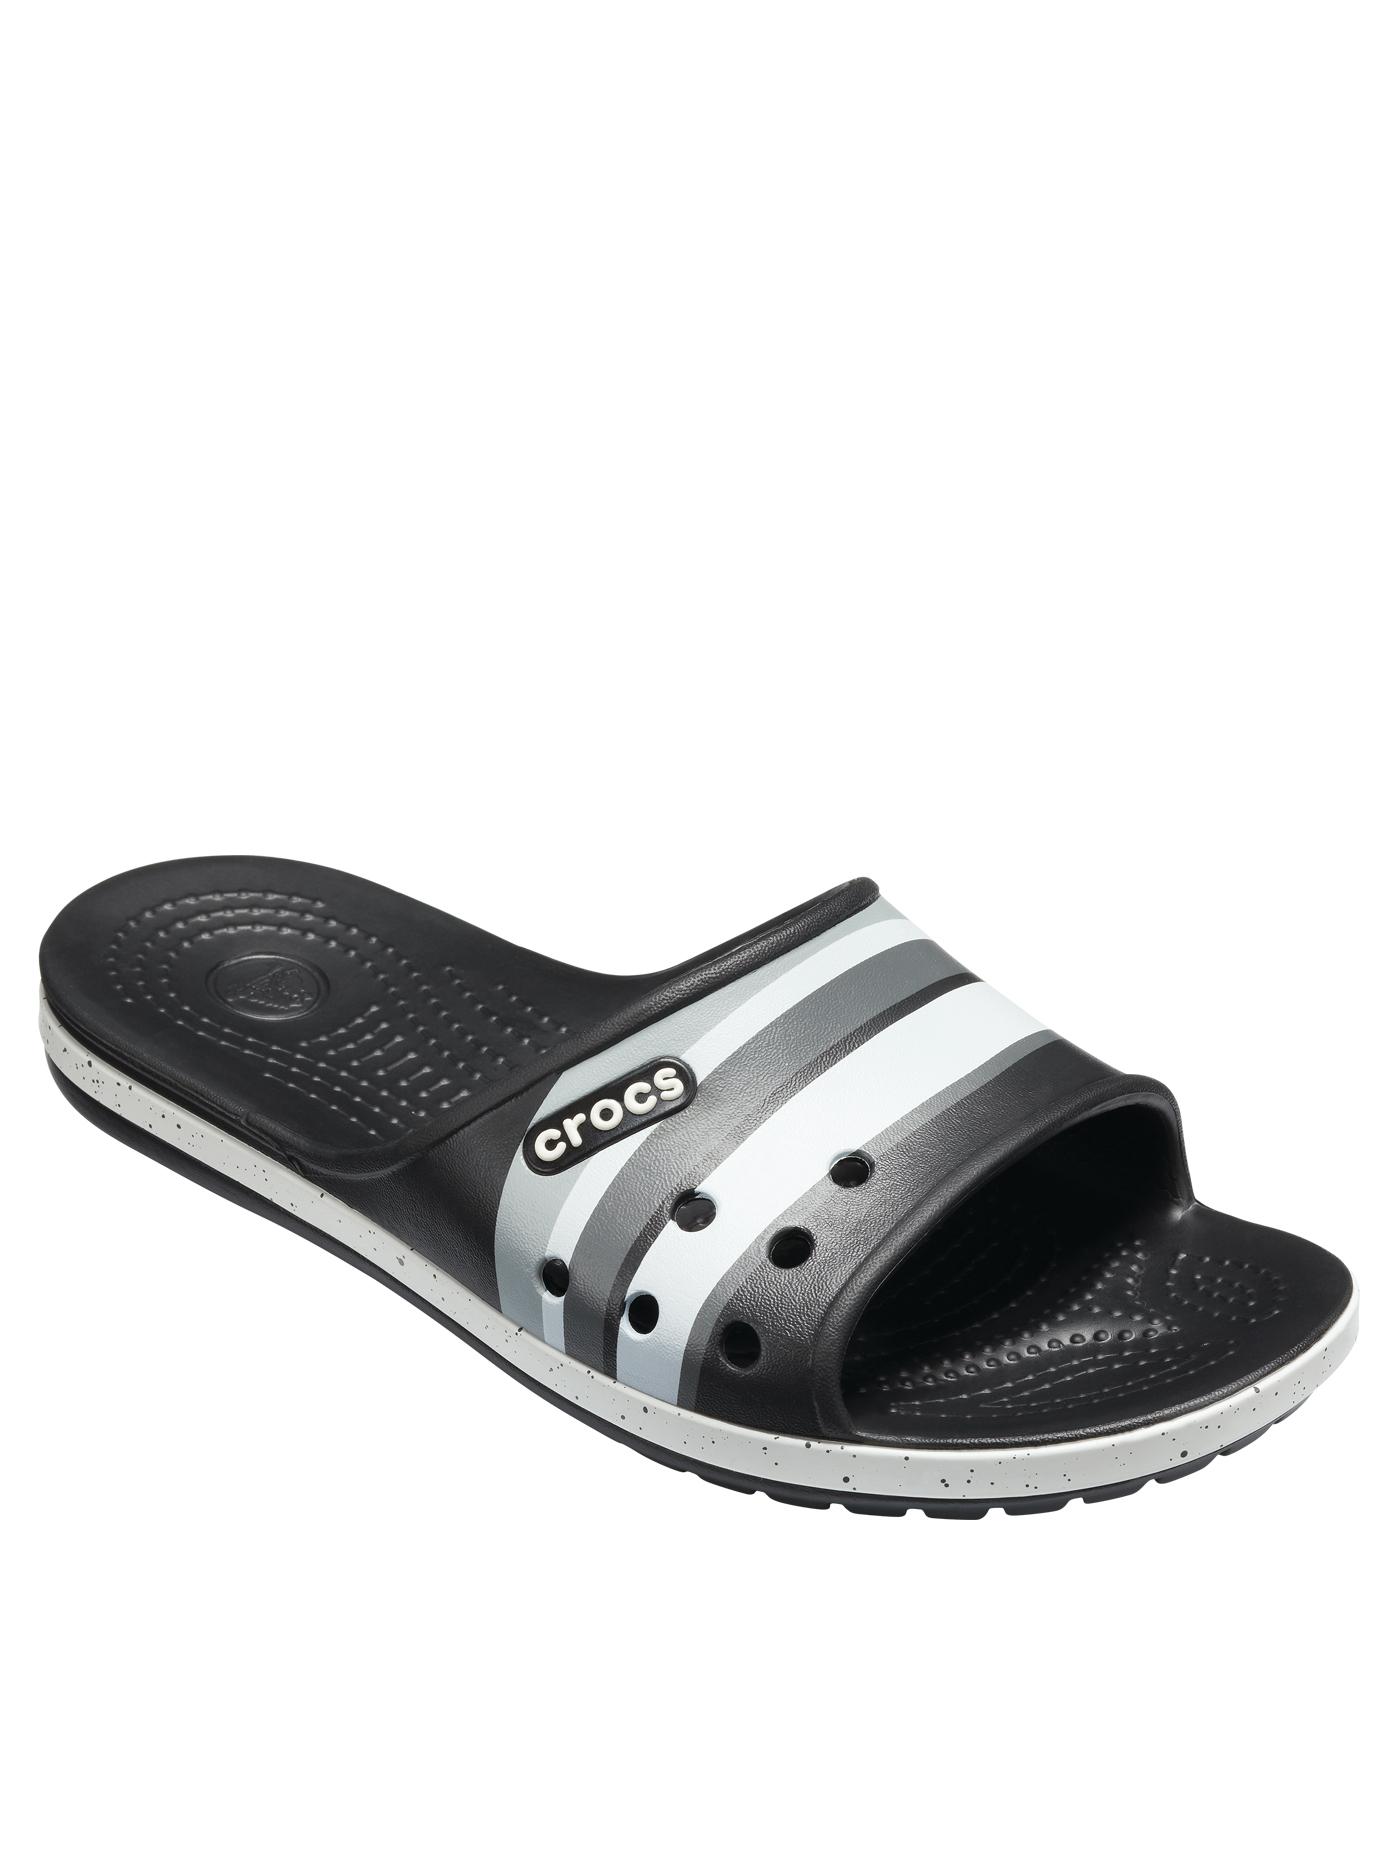 CROCS รองเท้าแตะสำหรับผู้ใหญ่ รุ่น Crocband II Graphic Slide ไซส์ M5/W7 สีดำ-ขาว